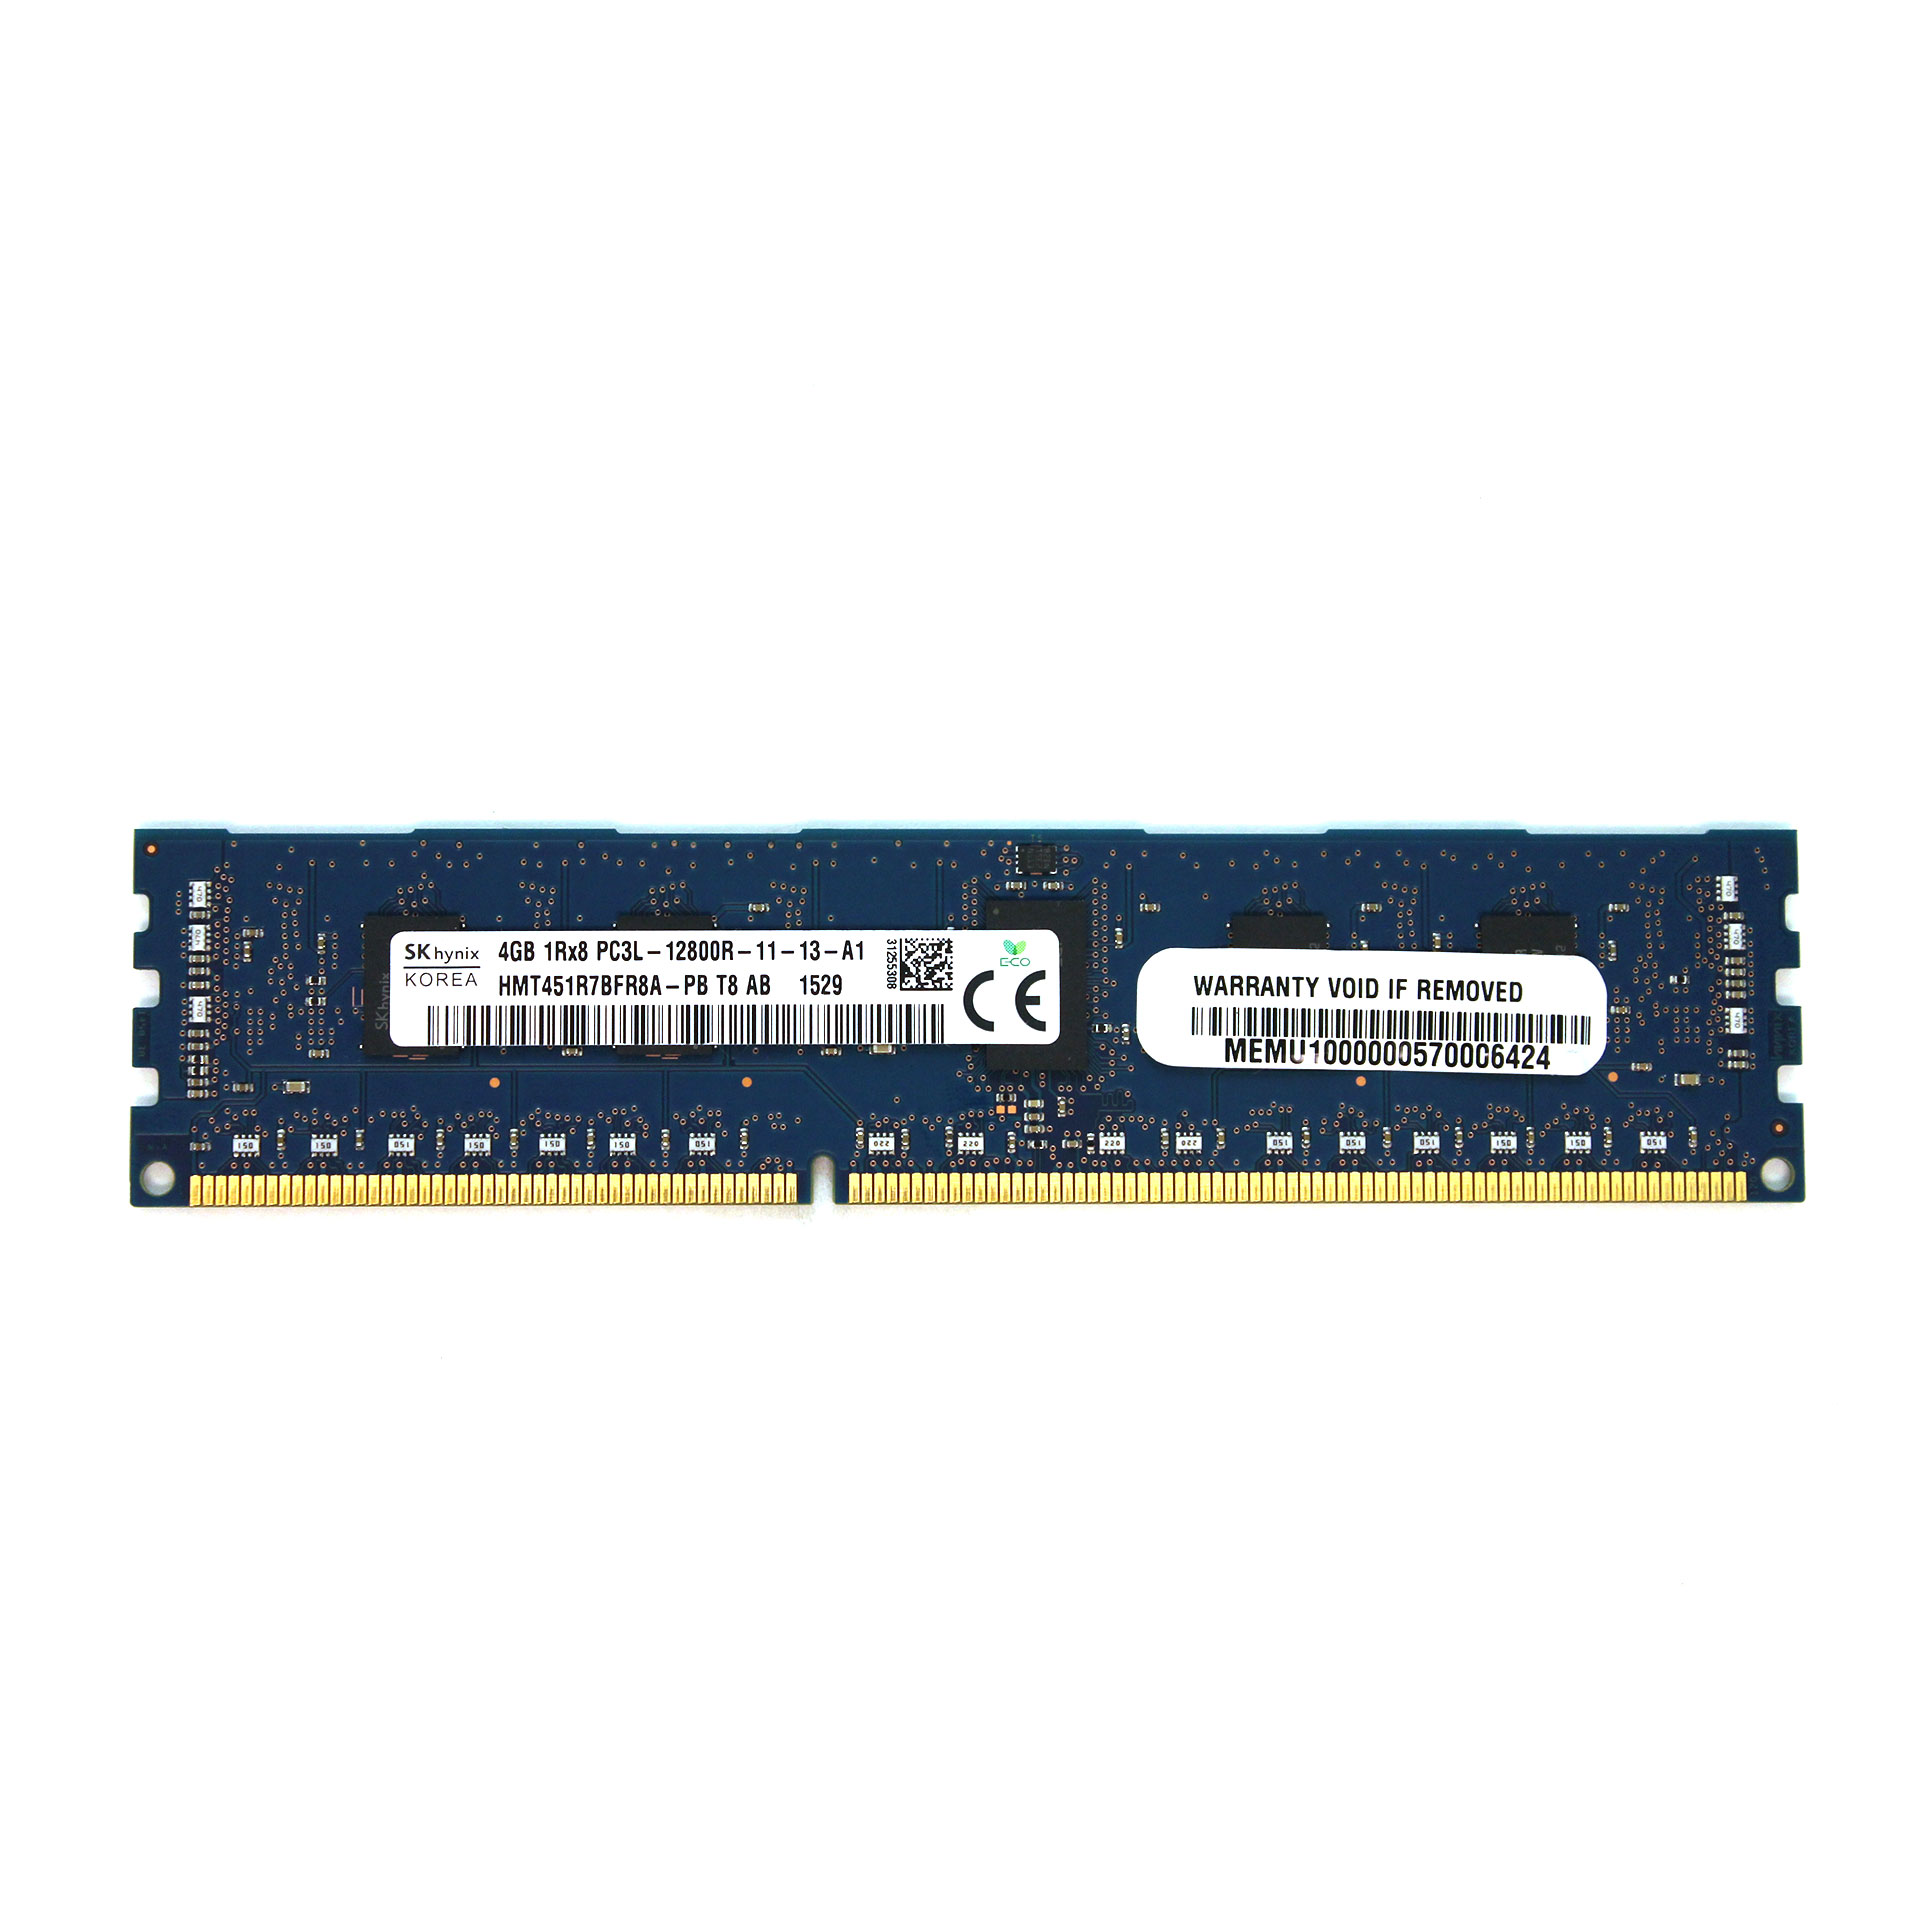 Supermicro/Hynix 4GB RAM DDR3 PC3L-12800R ECC HMT451R7BFR8A-PB - Click Image to Close